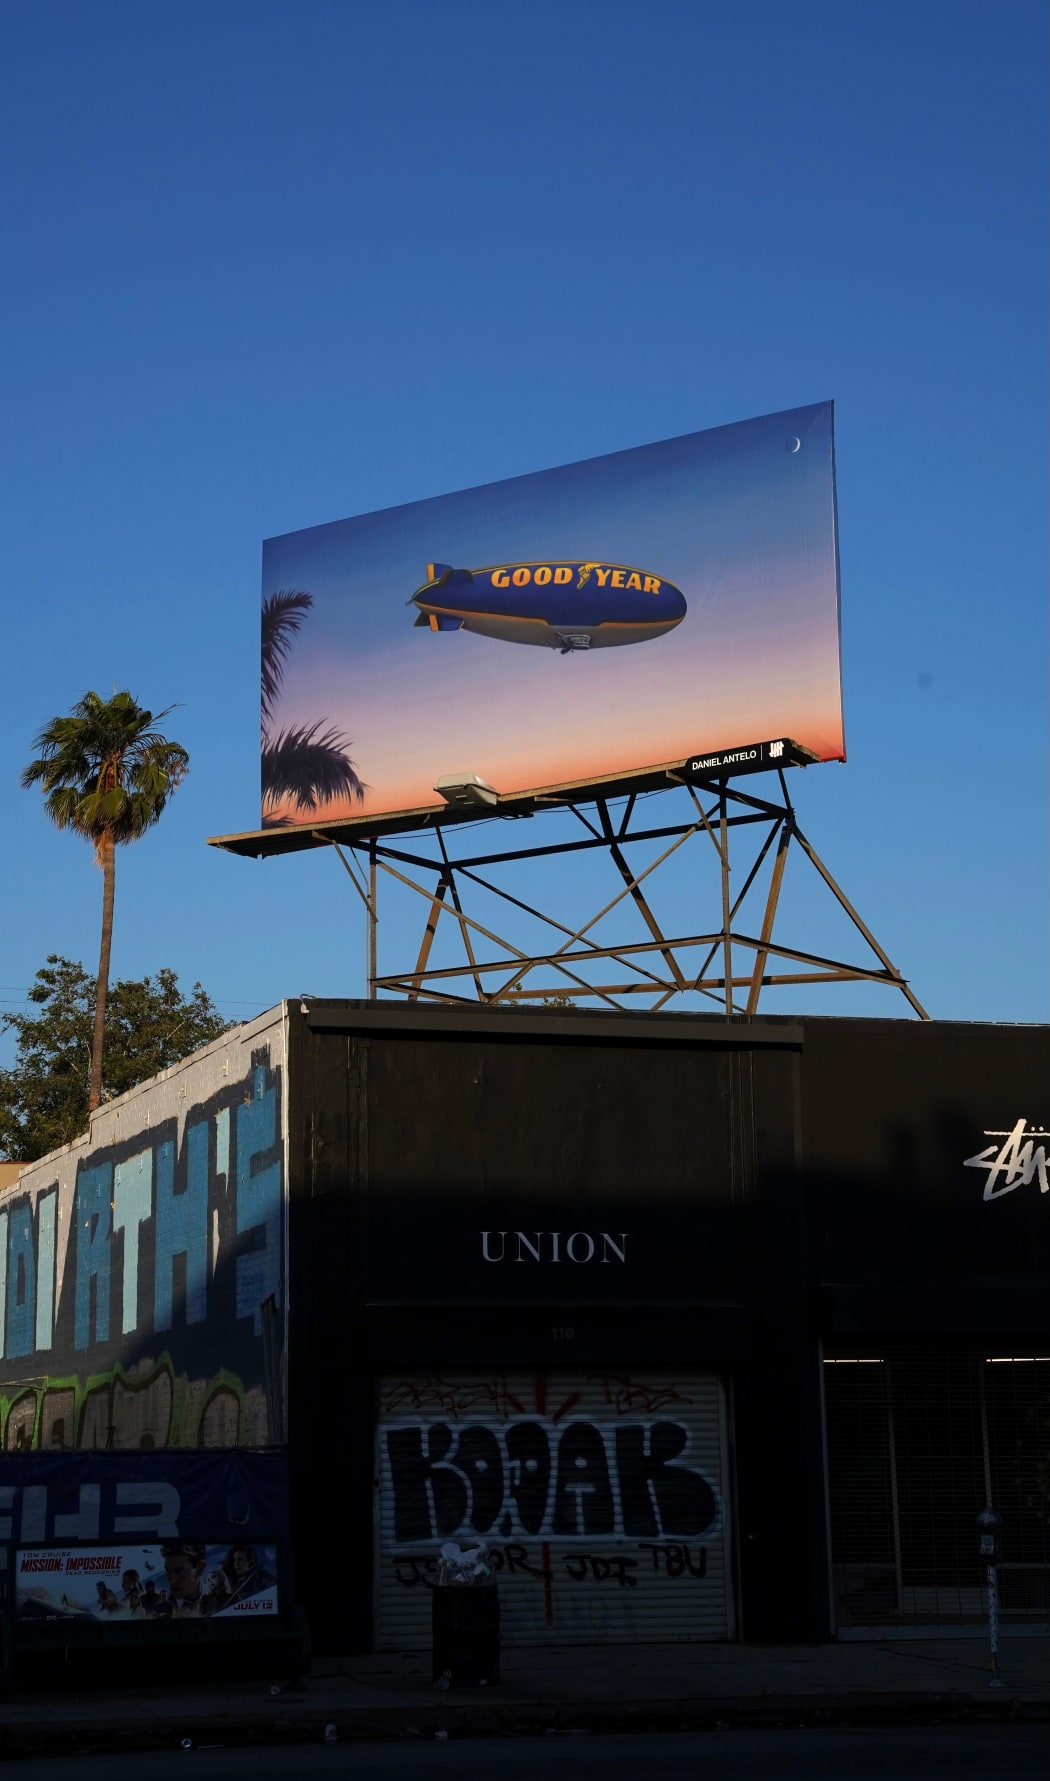 photo of a billboard by daniel antelo - goodyear blimp flying in the sky